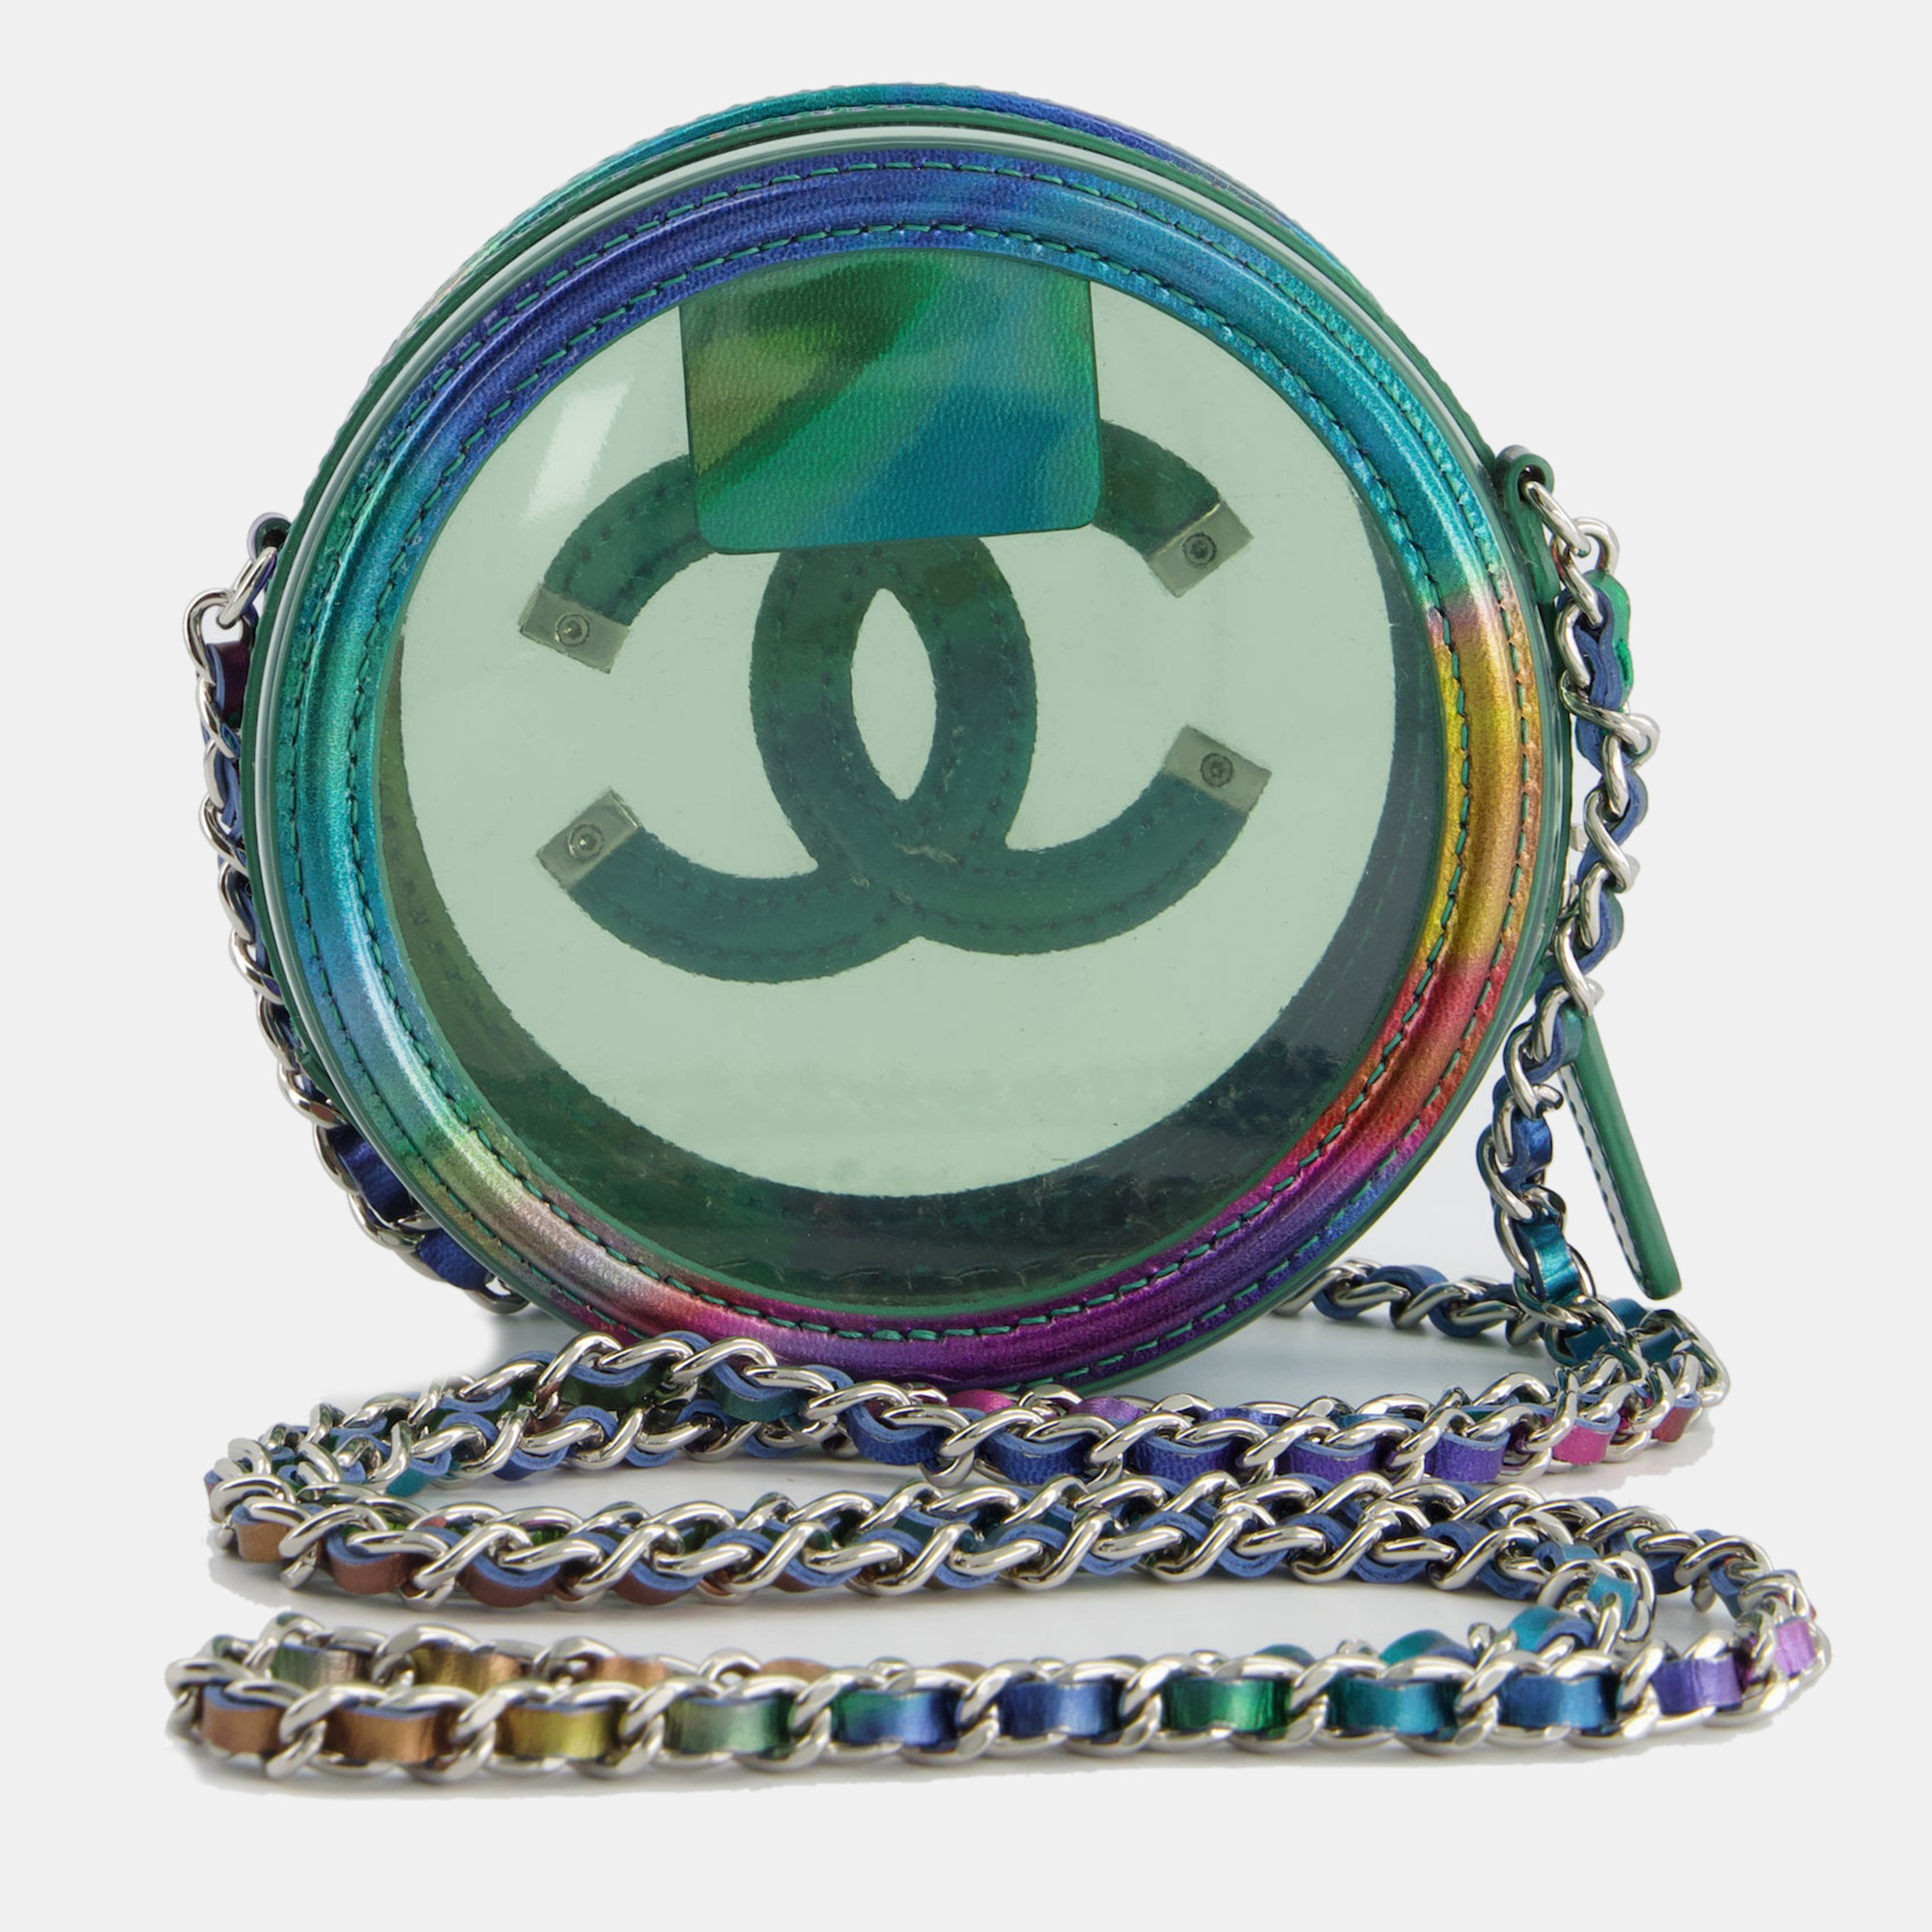 Chanel rainbow green filigree pvc cc mini round crossbody bag with silver hardware